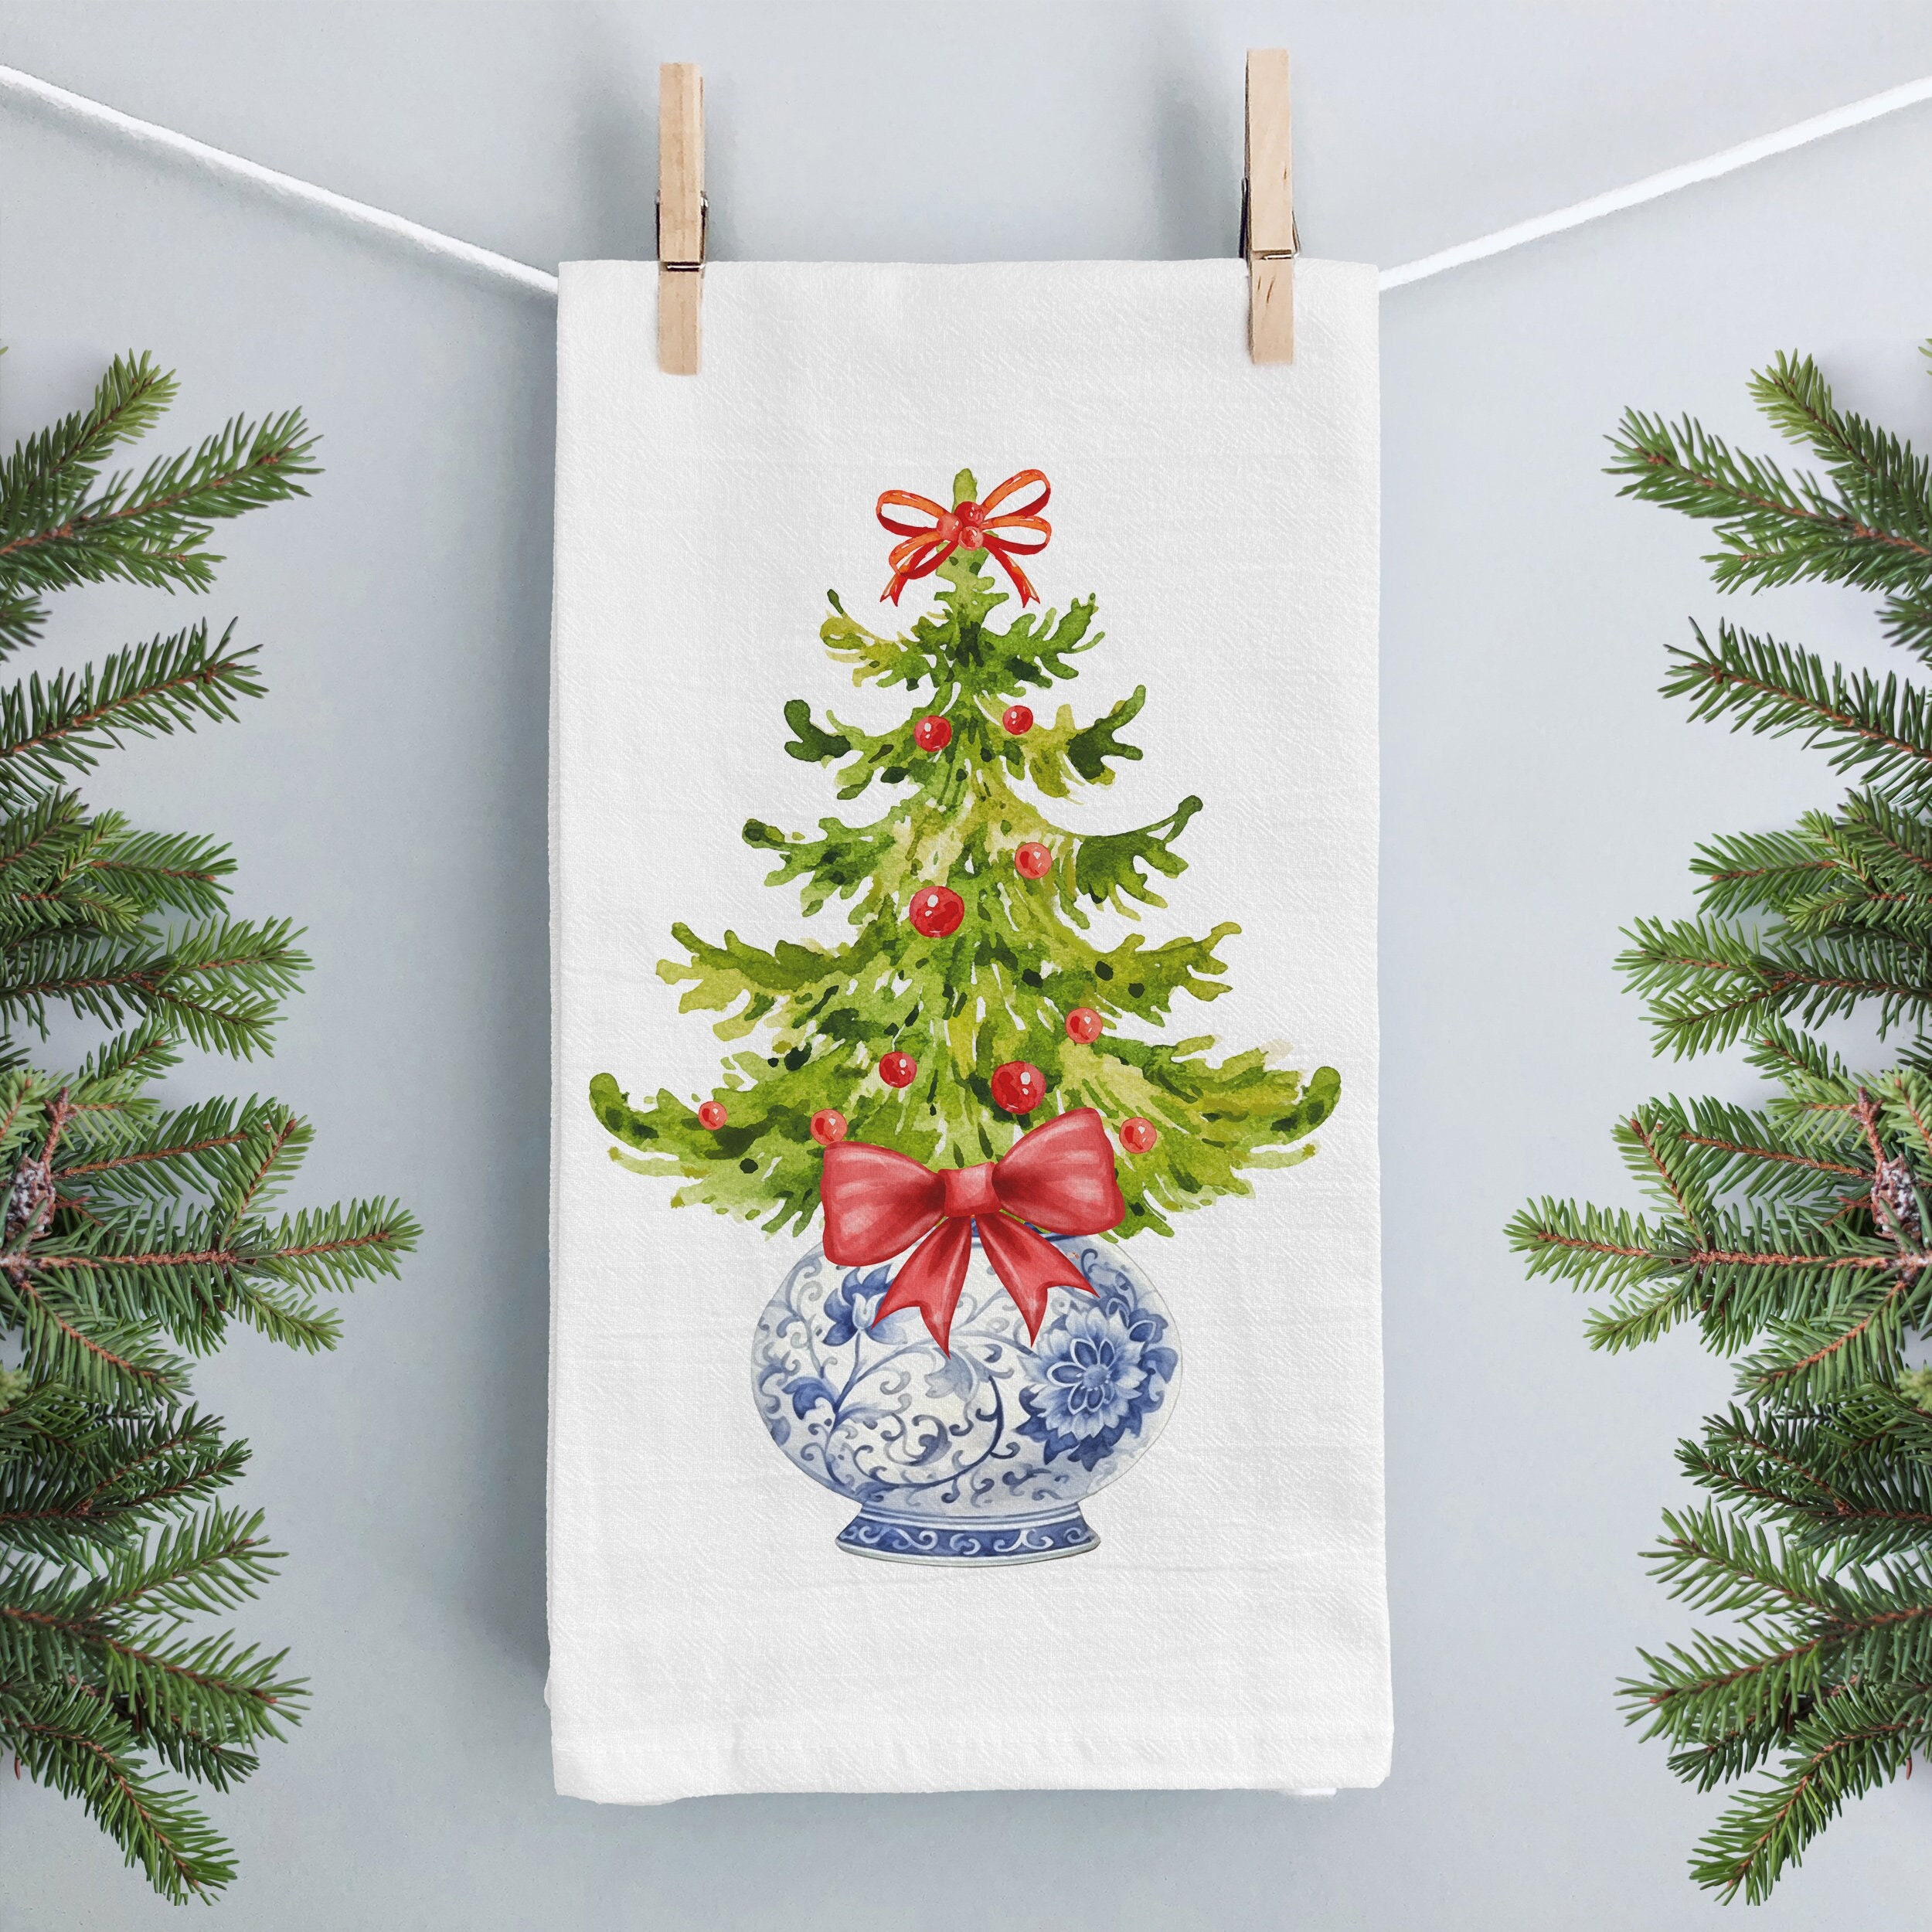 Folkulture Christmas Kitchen Towels Set of 3 for Christmas Decorations  Theme, 26x20 Farmhouse Dish Towels or Tea Towels for Decor, Cotton  Decorative